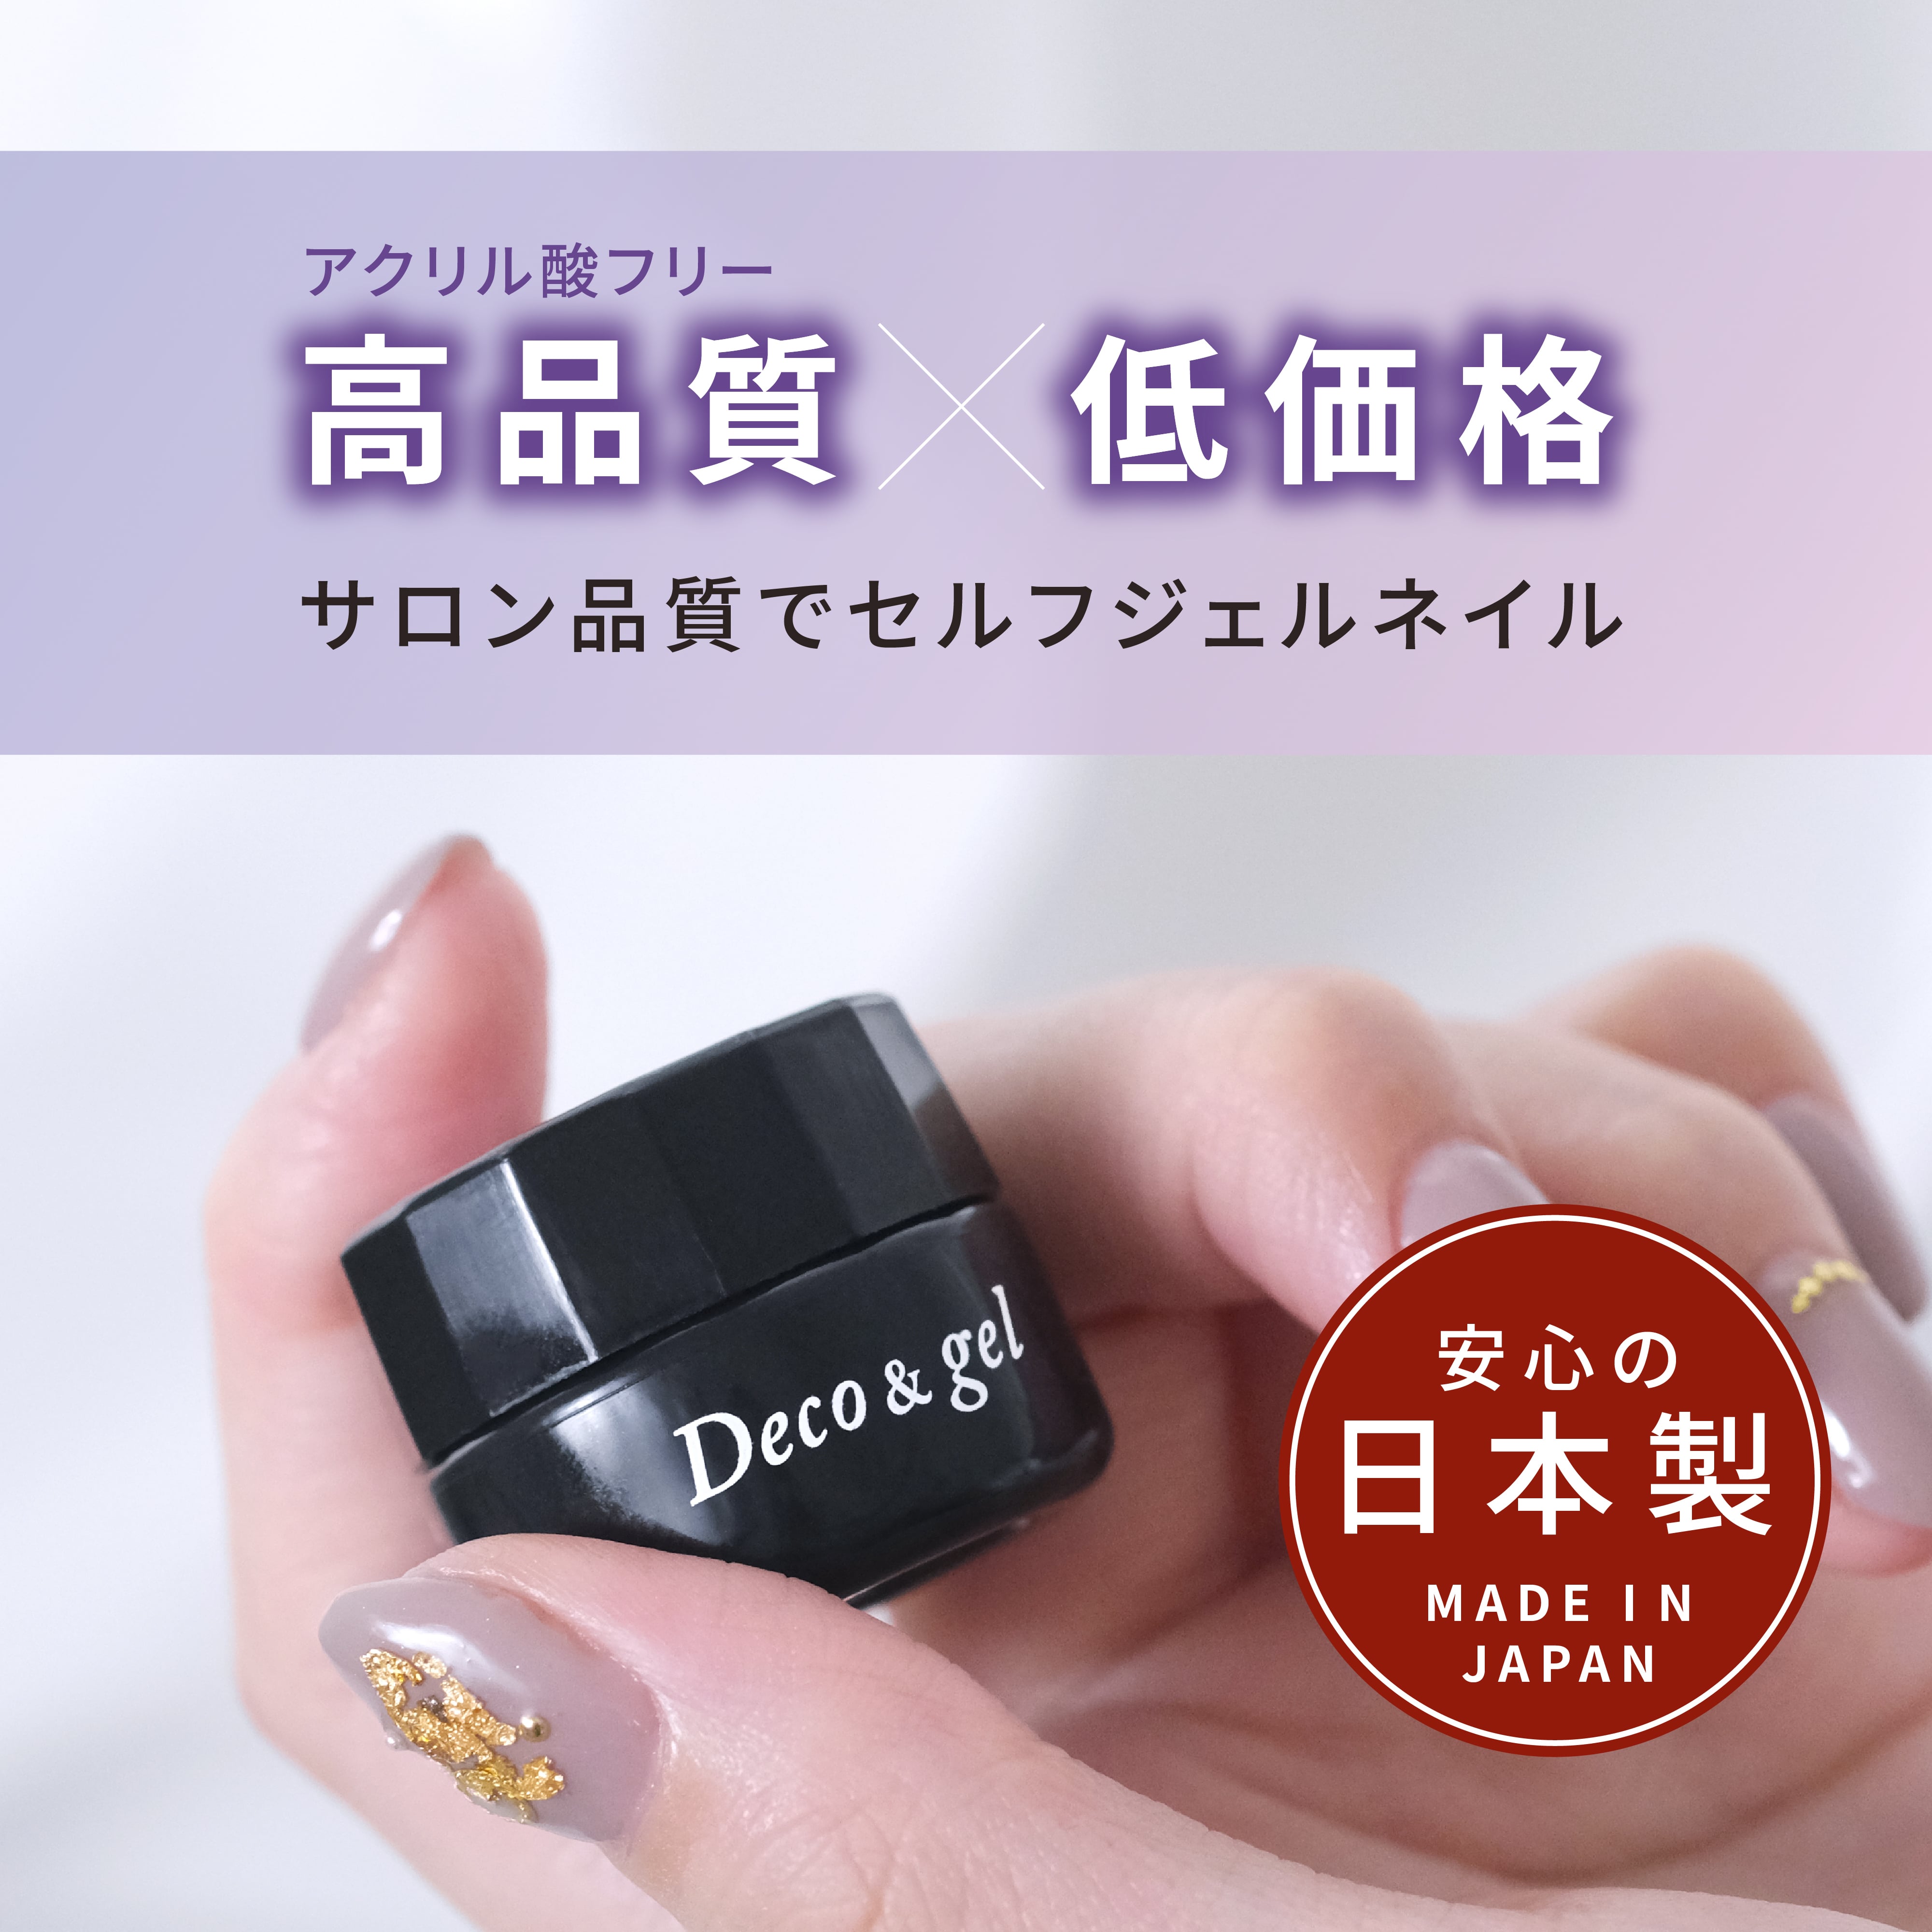 Deco＆gel（デコエンジェル） / カラージェル IN347（Lavender/Pearl）